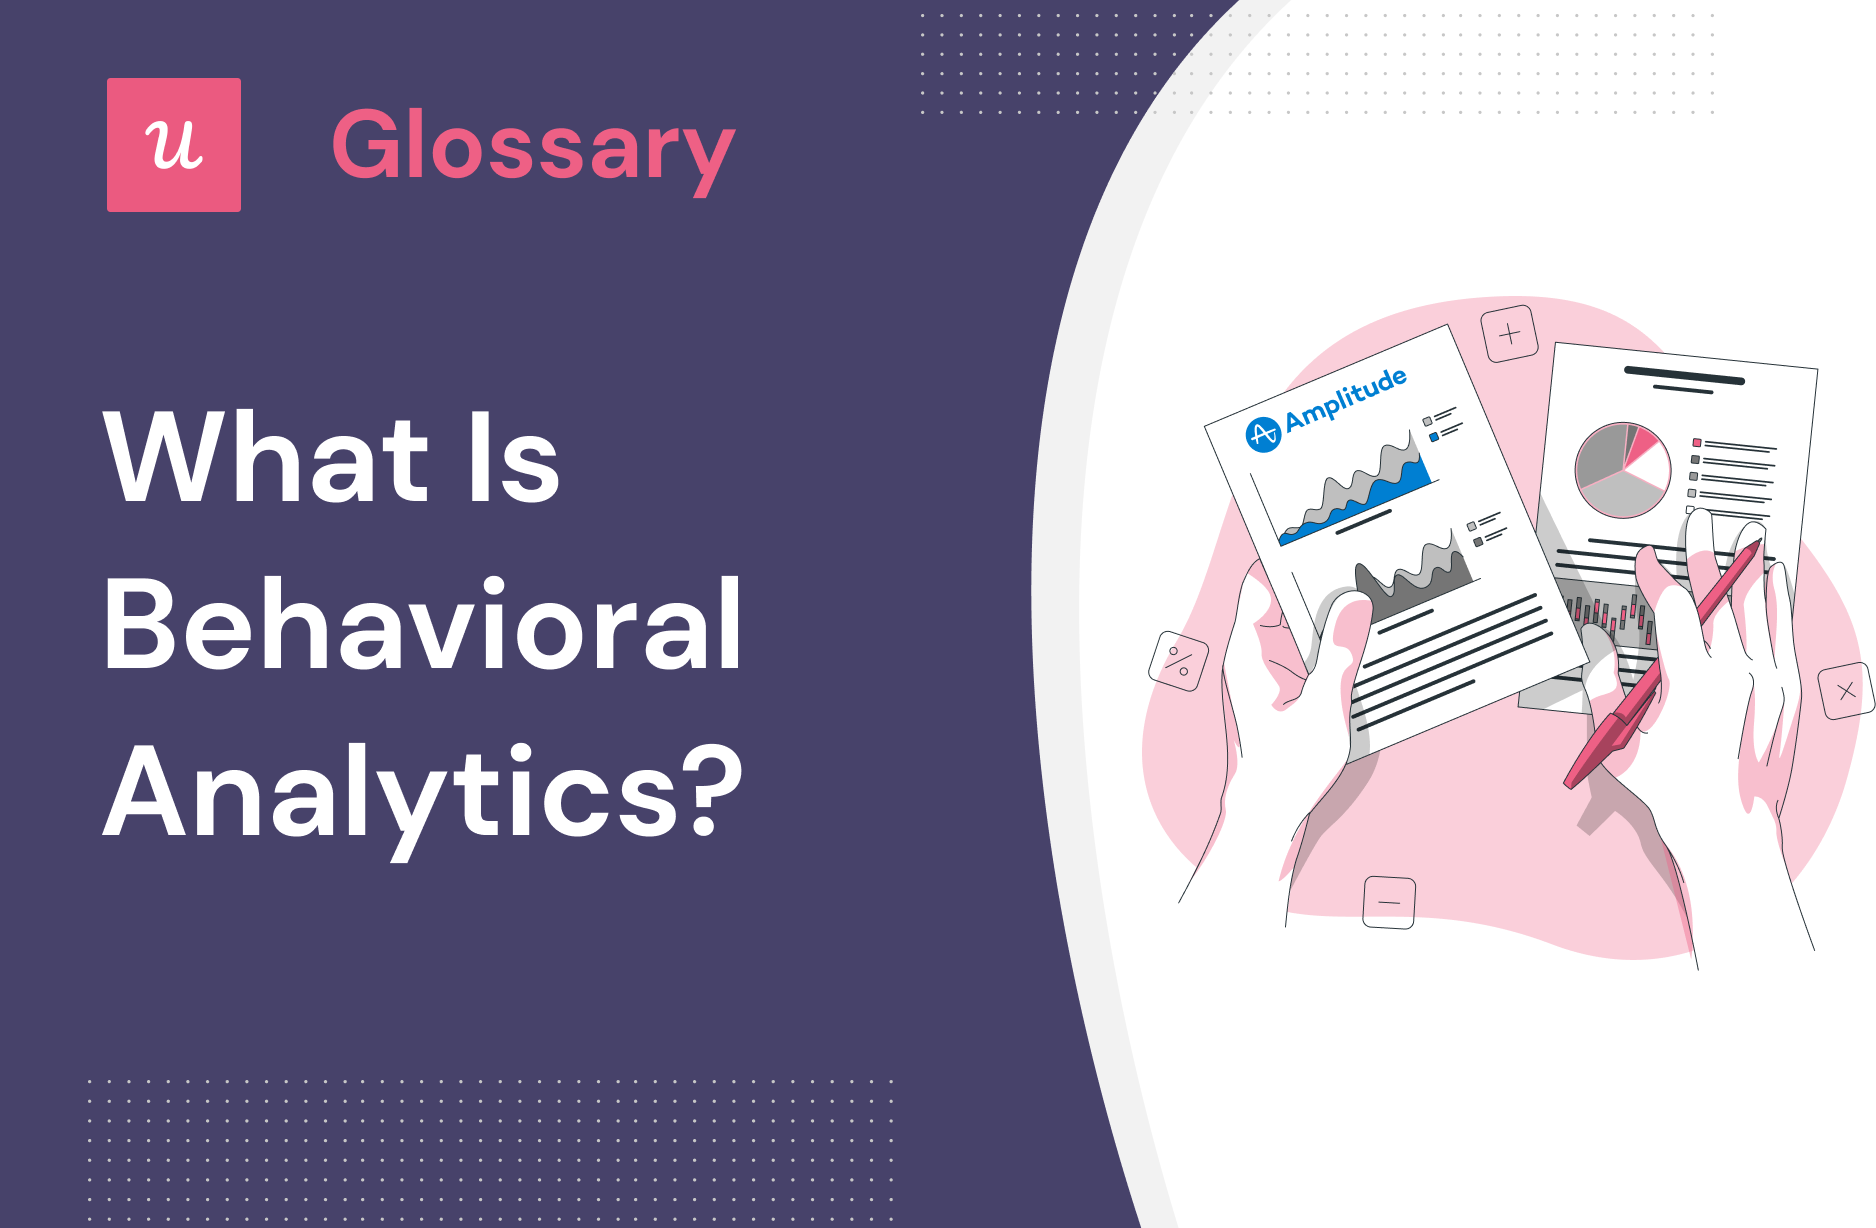 What is Behavioral Analytics?